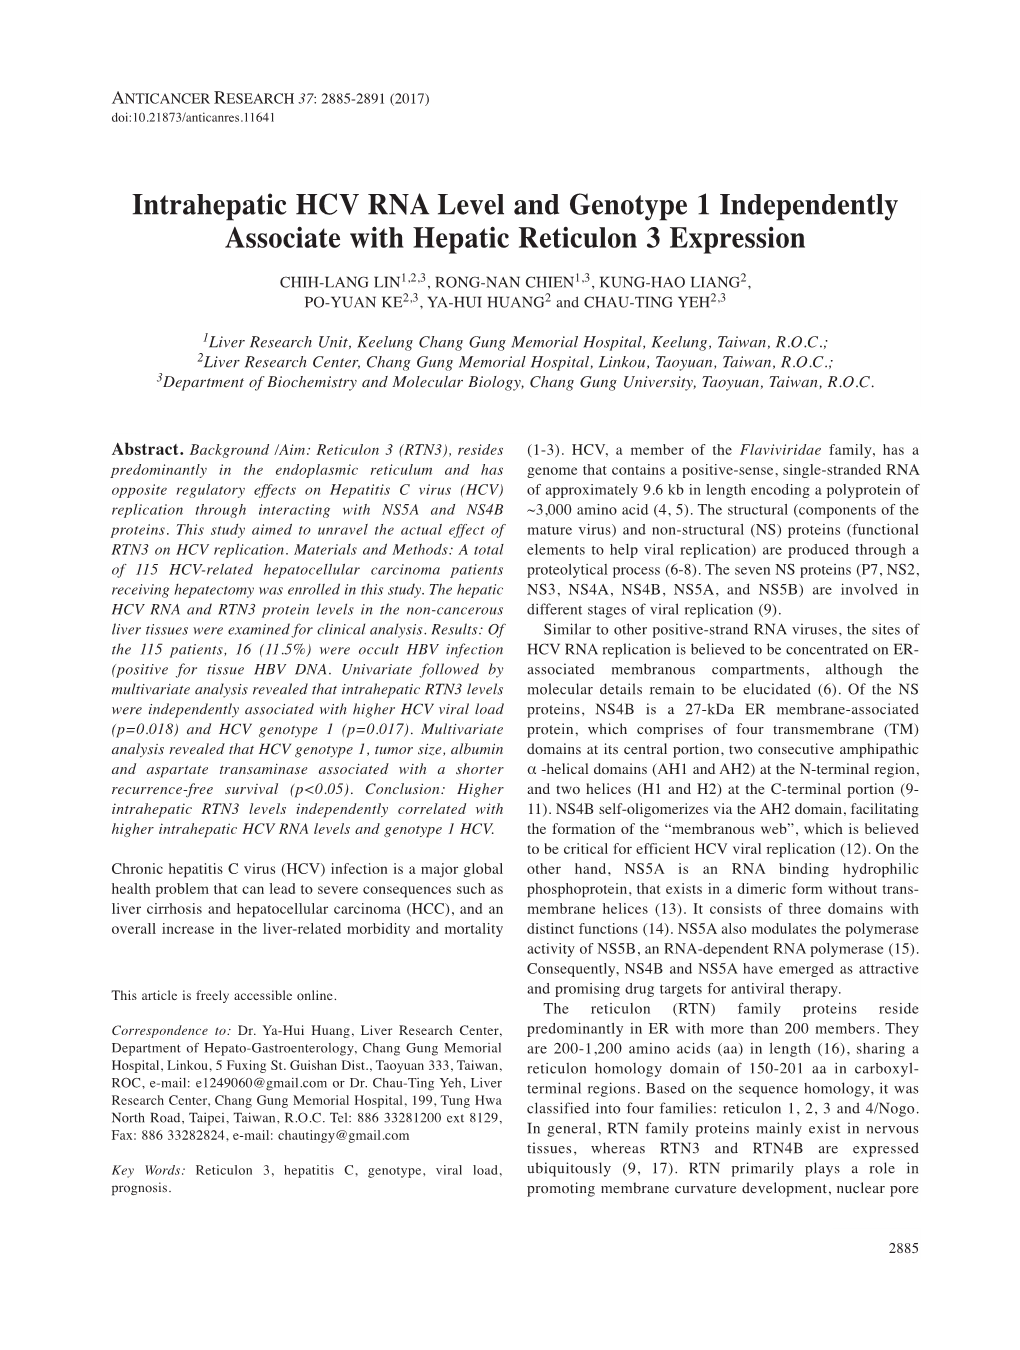 Intrahepatic HCV RNA Level and Genotype 1 Independently